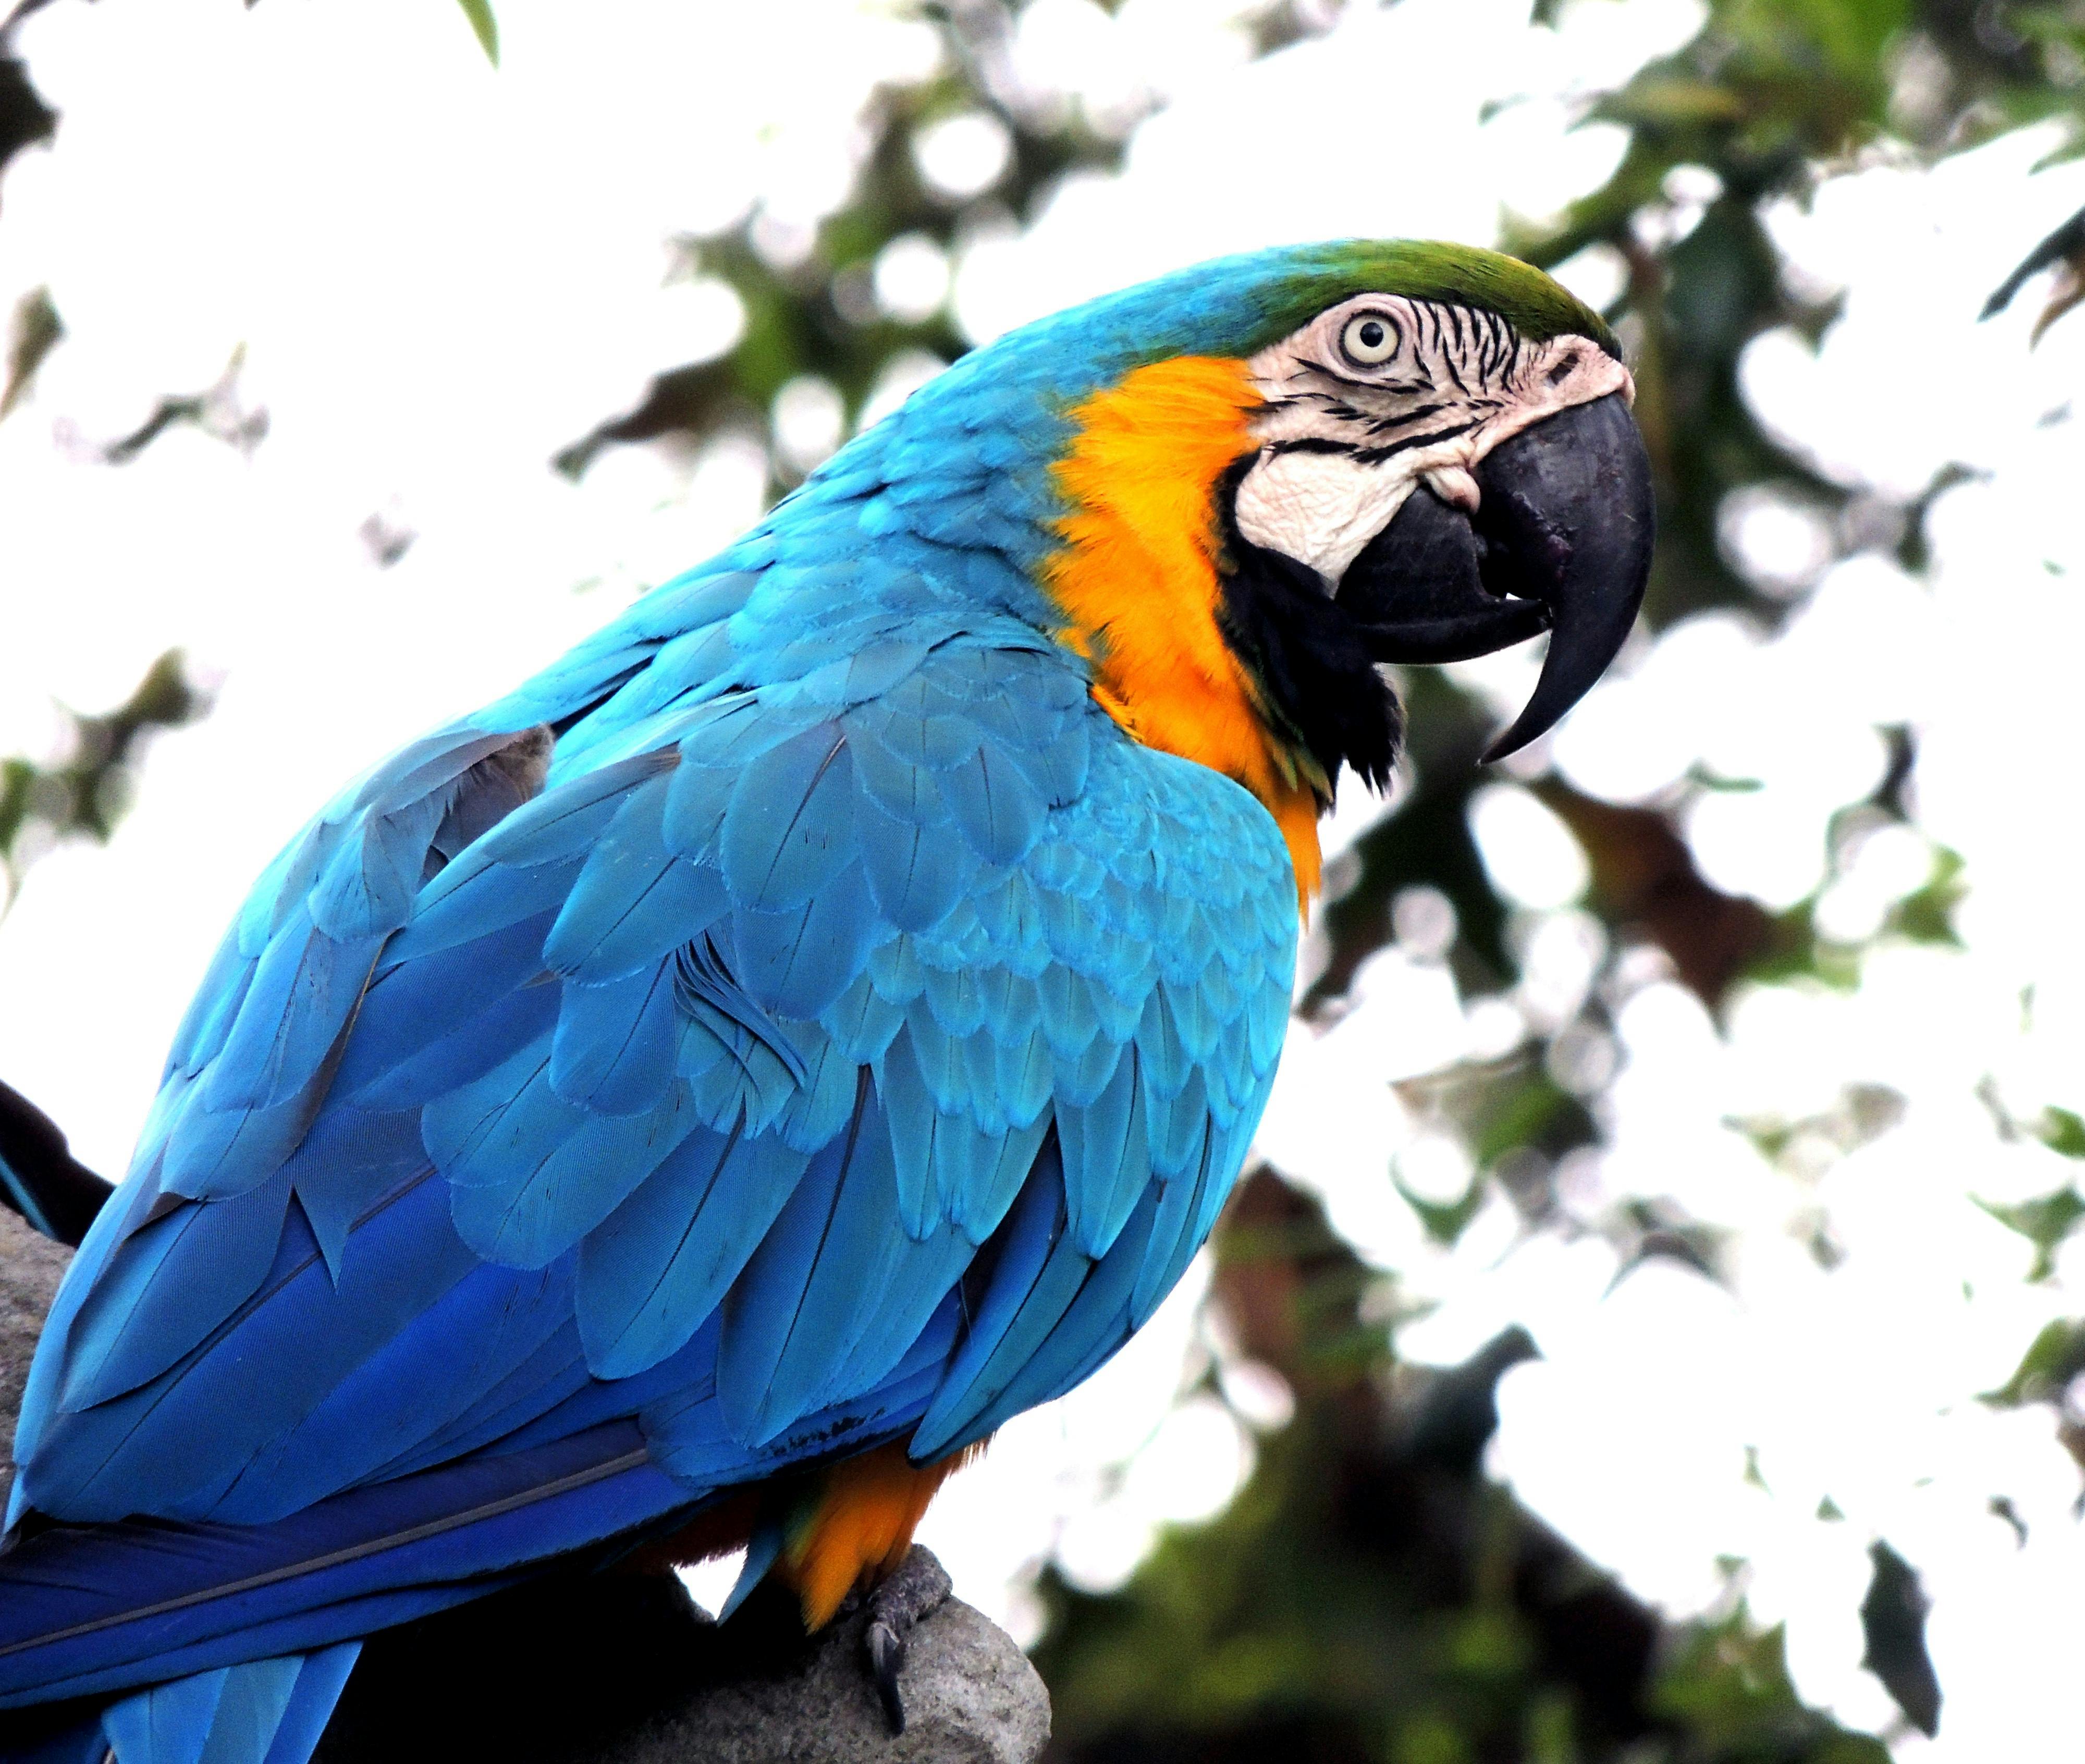 African Grey Parrot: "